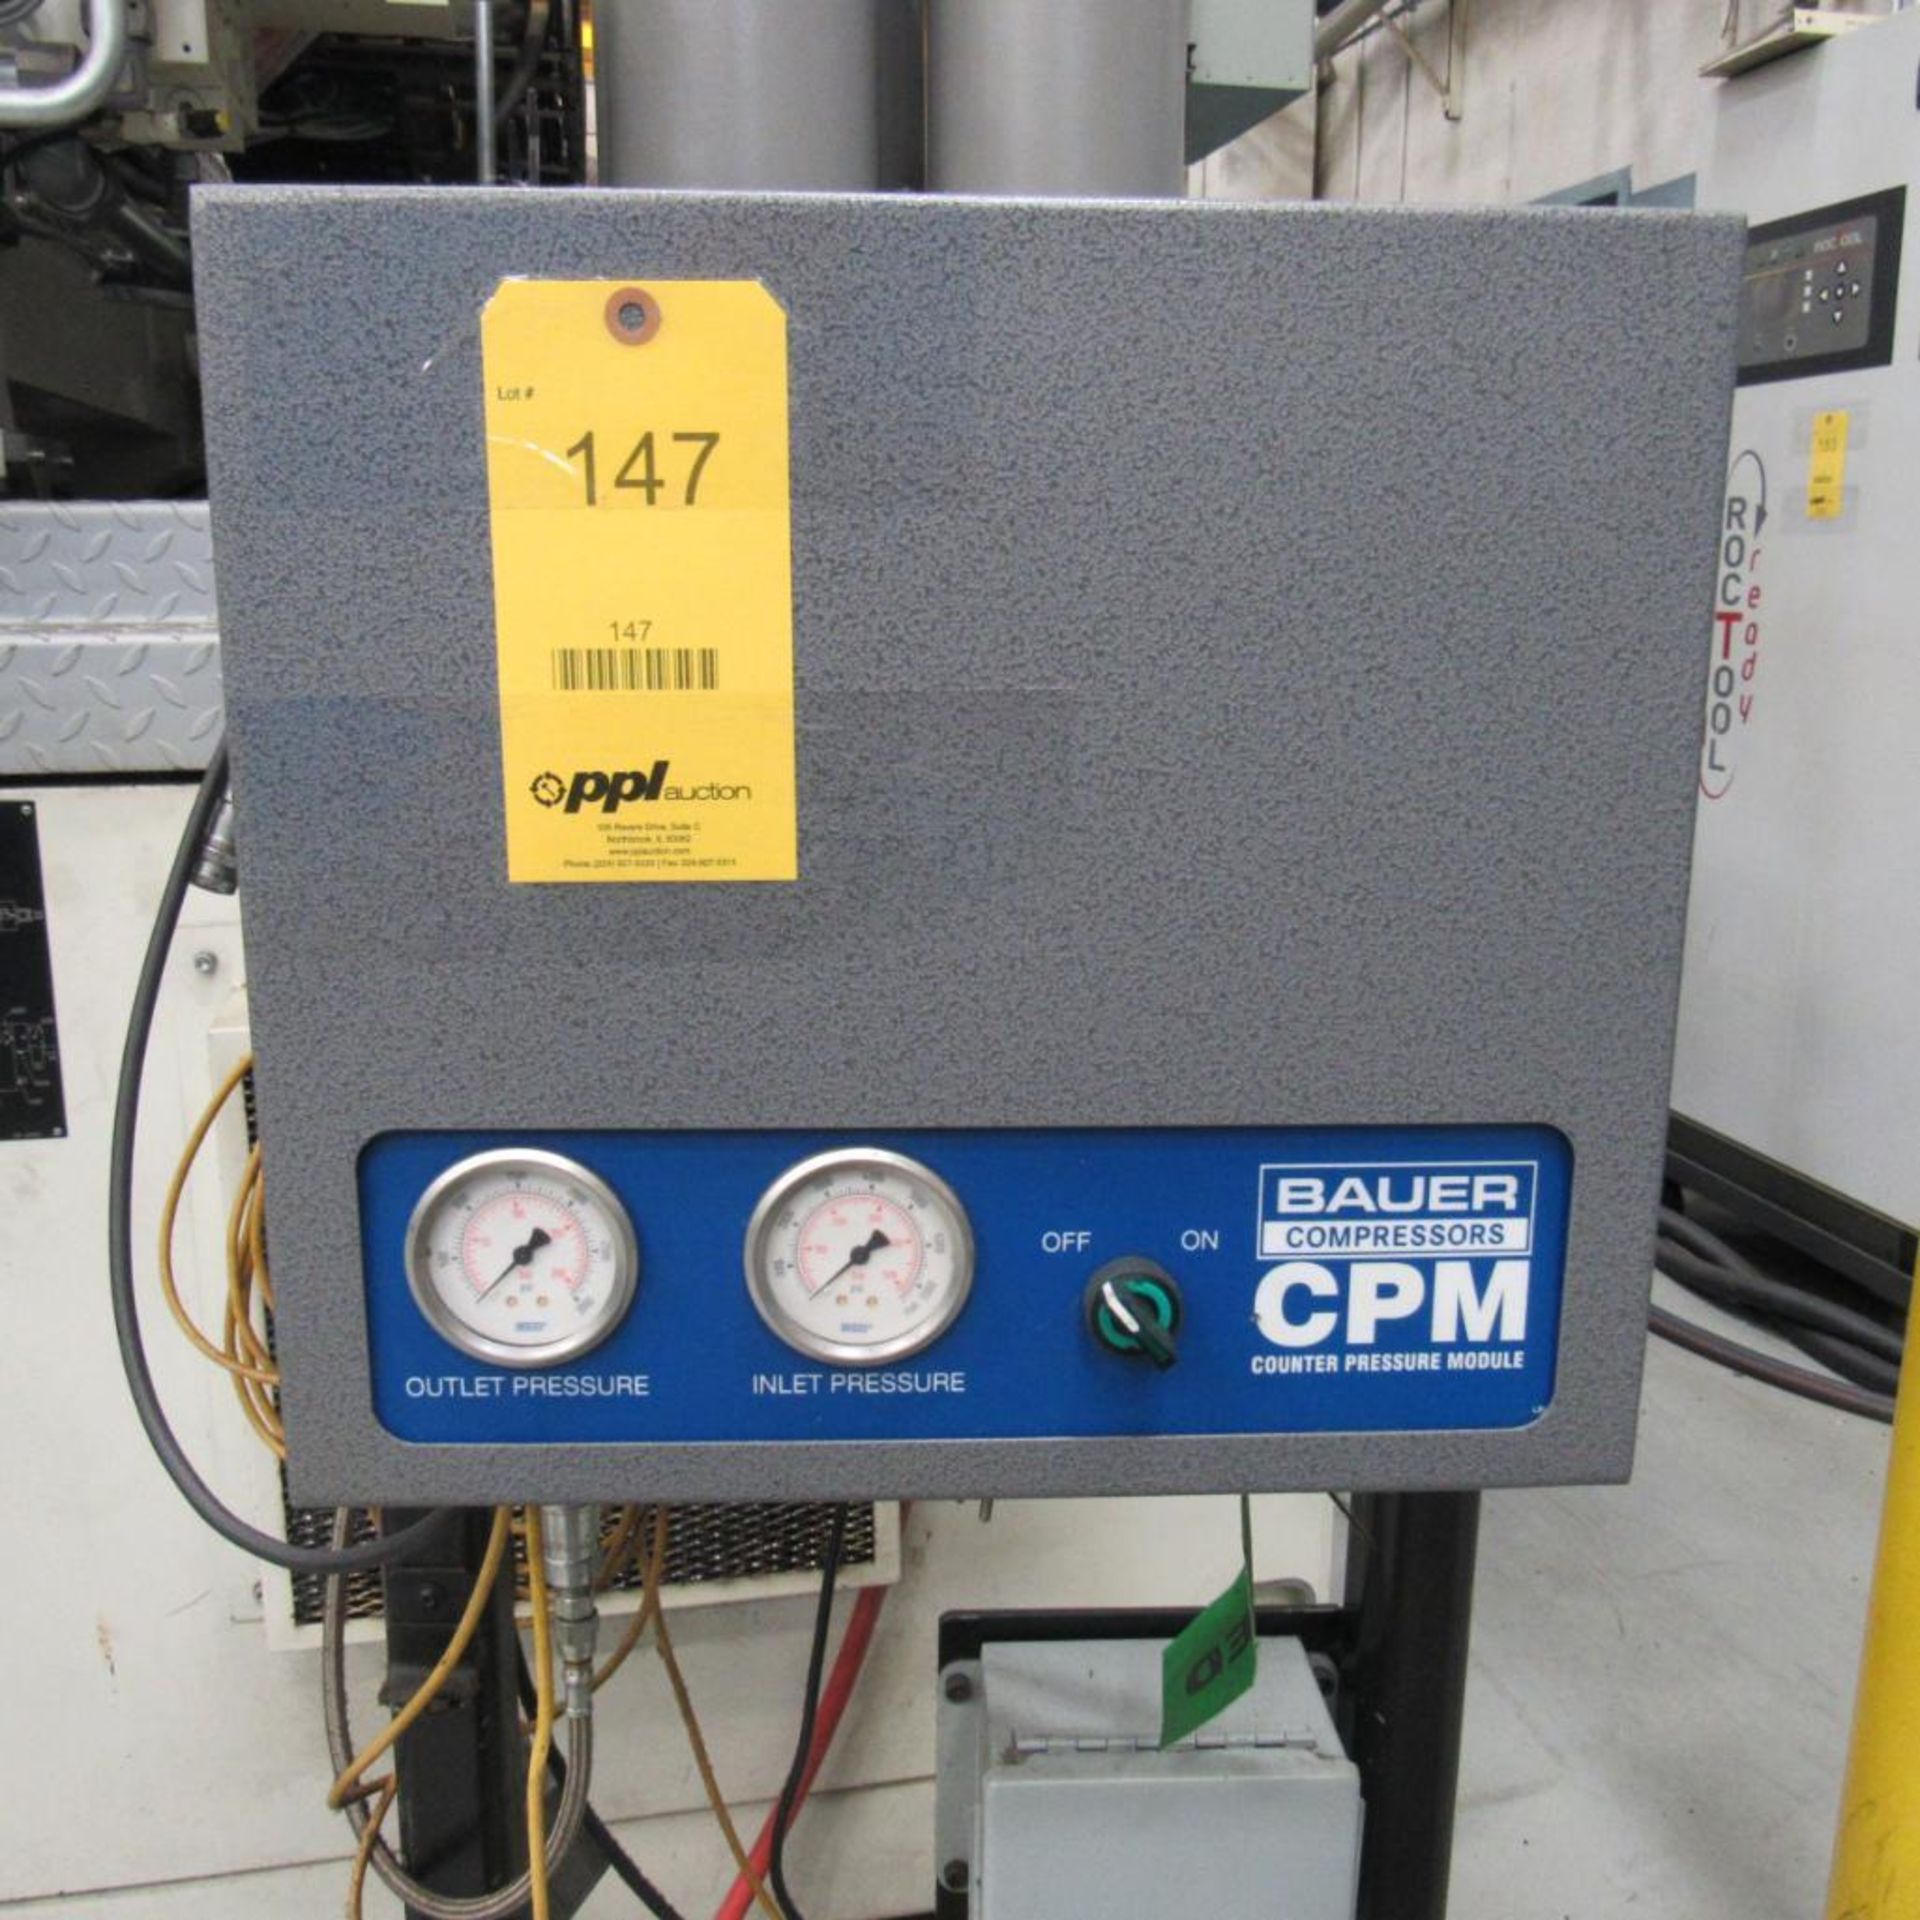 Bauer CPM Counter Pressure Module (Location: Bldg. 1) - Image 2 of 3